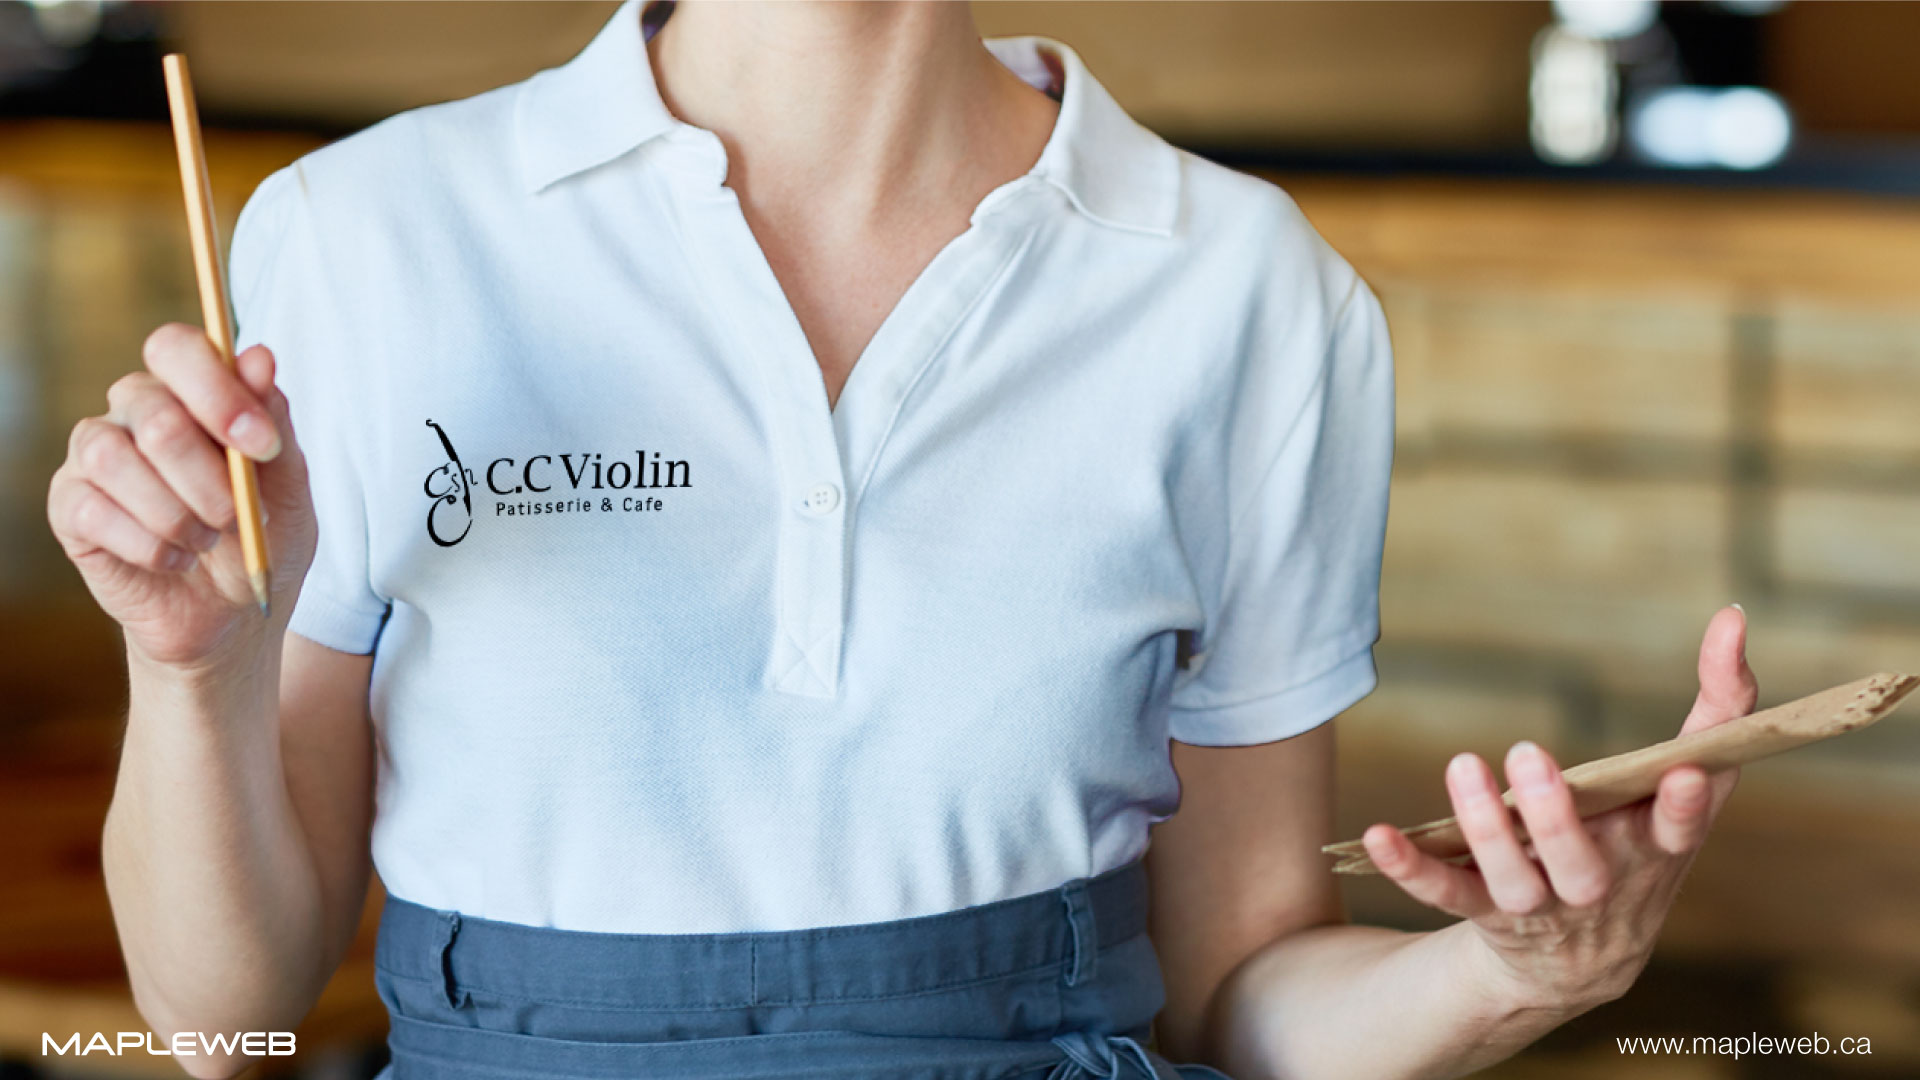 c.c violin-brand-logo-design-by-mapleweb-vancouver-canada-staff-female-uniform-mock